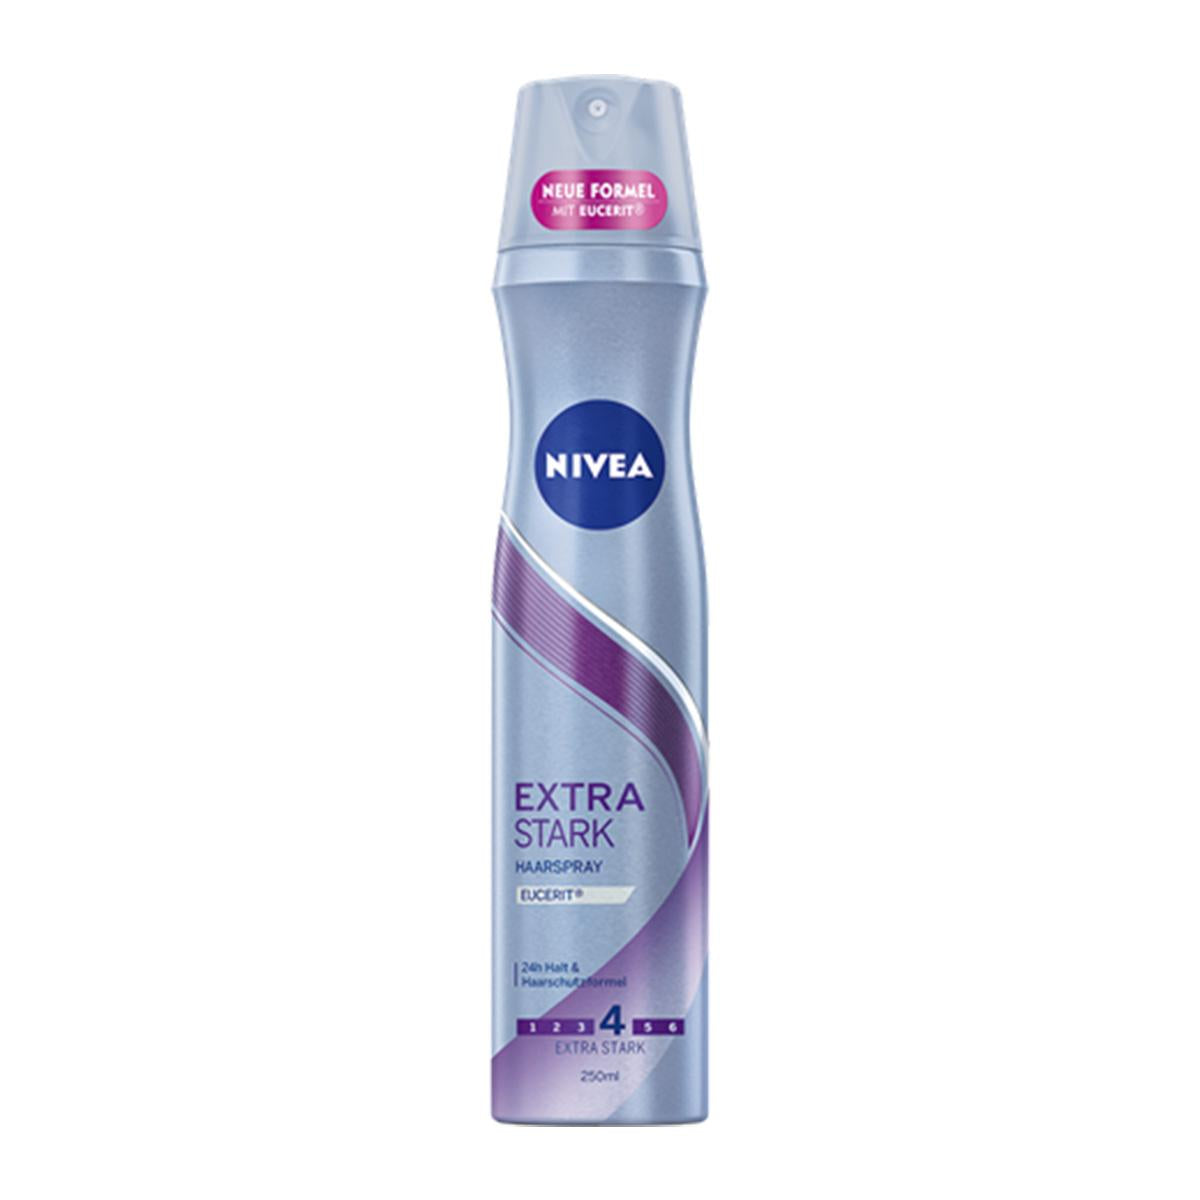 Primary image of Nivea Extra Hold Hair Spray